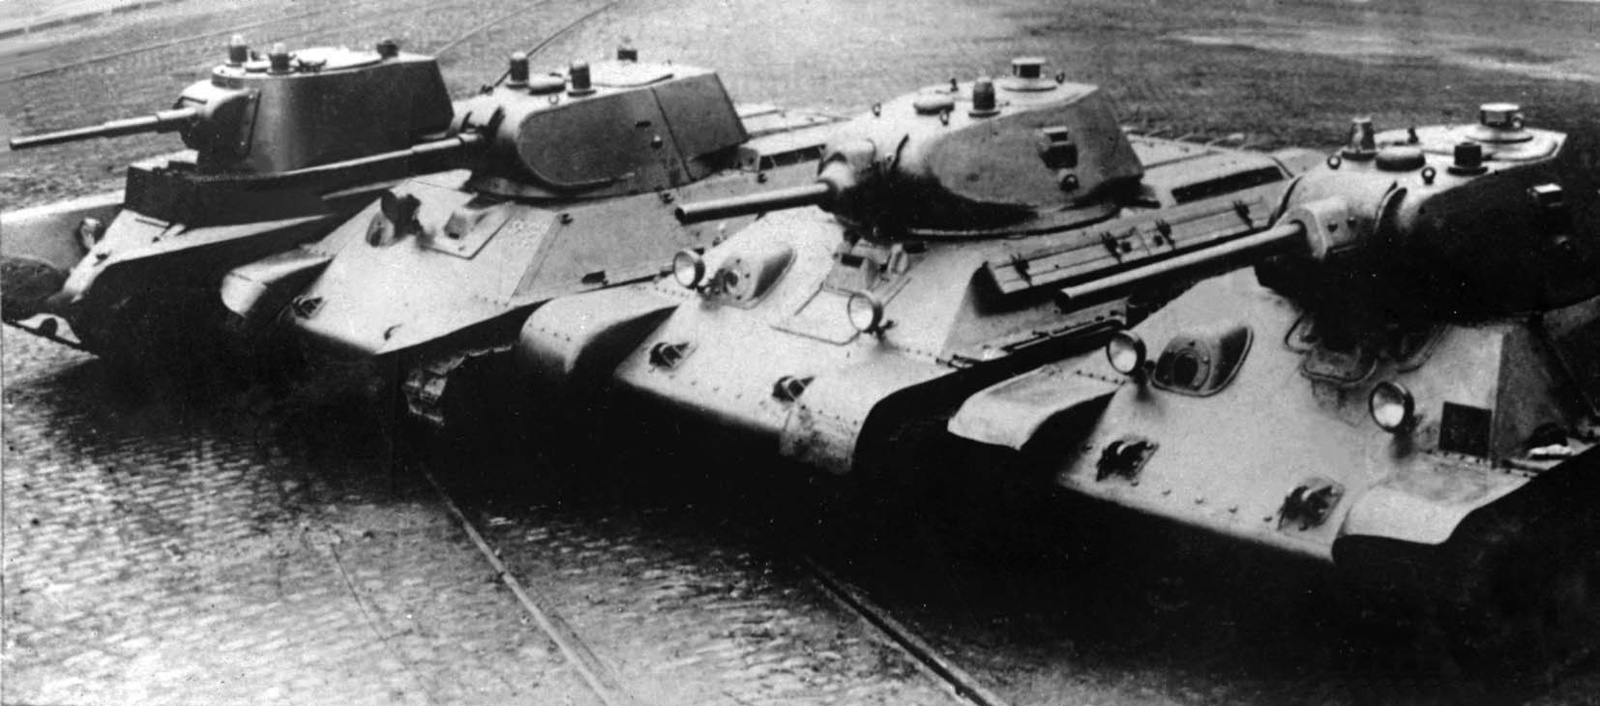 T-34 prototípusok BT-7 1935, A-20 1939, T-34-76 1940, T-34-76 19